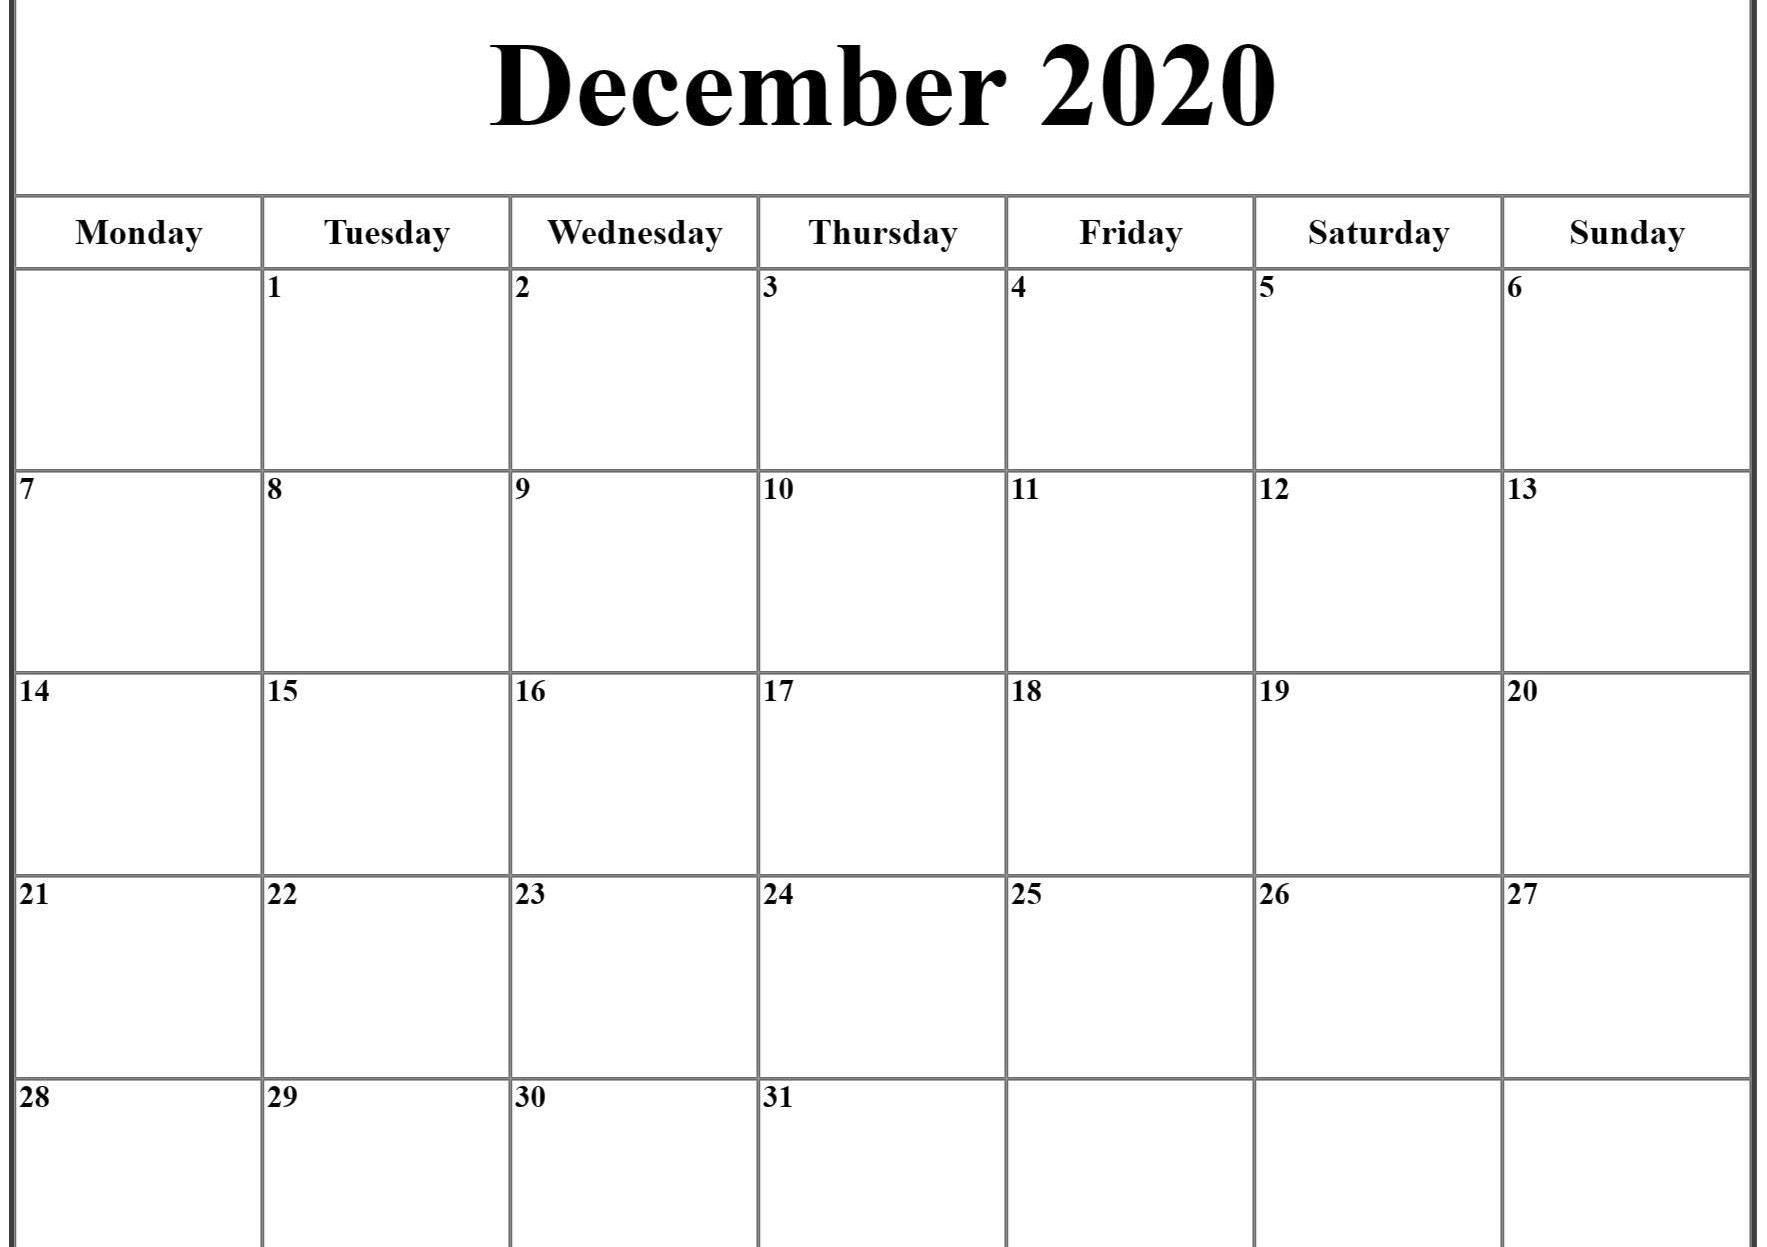 December Calendar 2020 Pdf, Word, Excel Printable Template-Blank Calendar December 2020 Letter Size